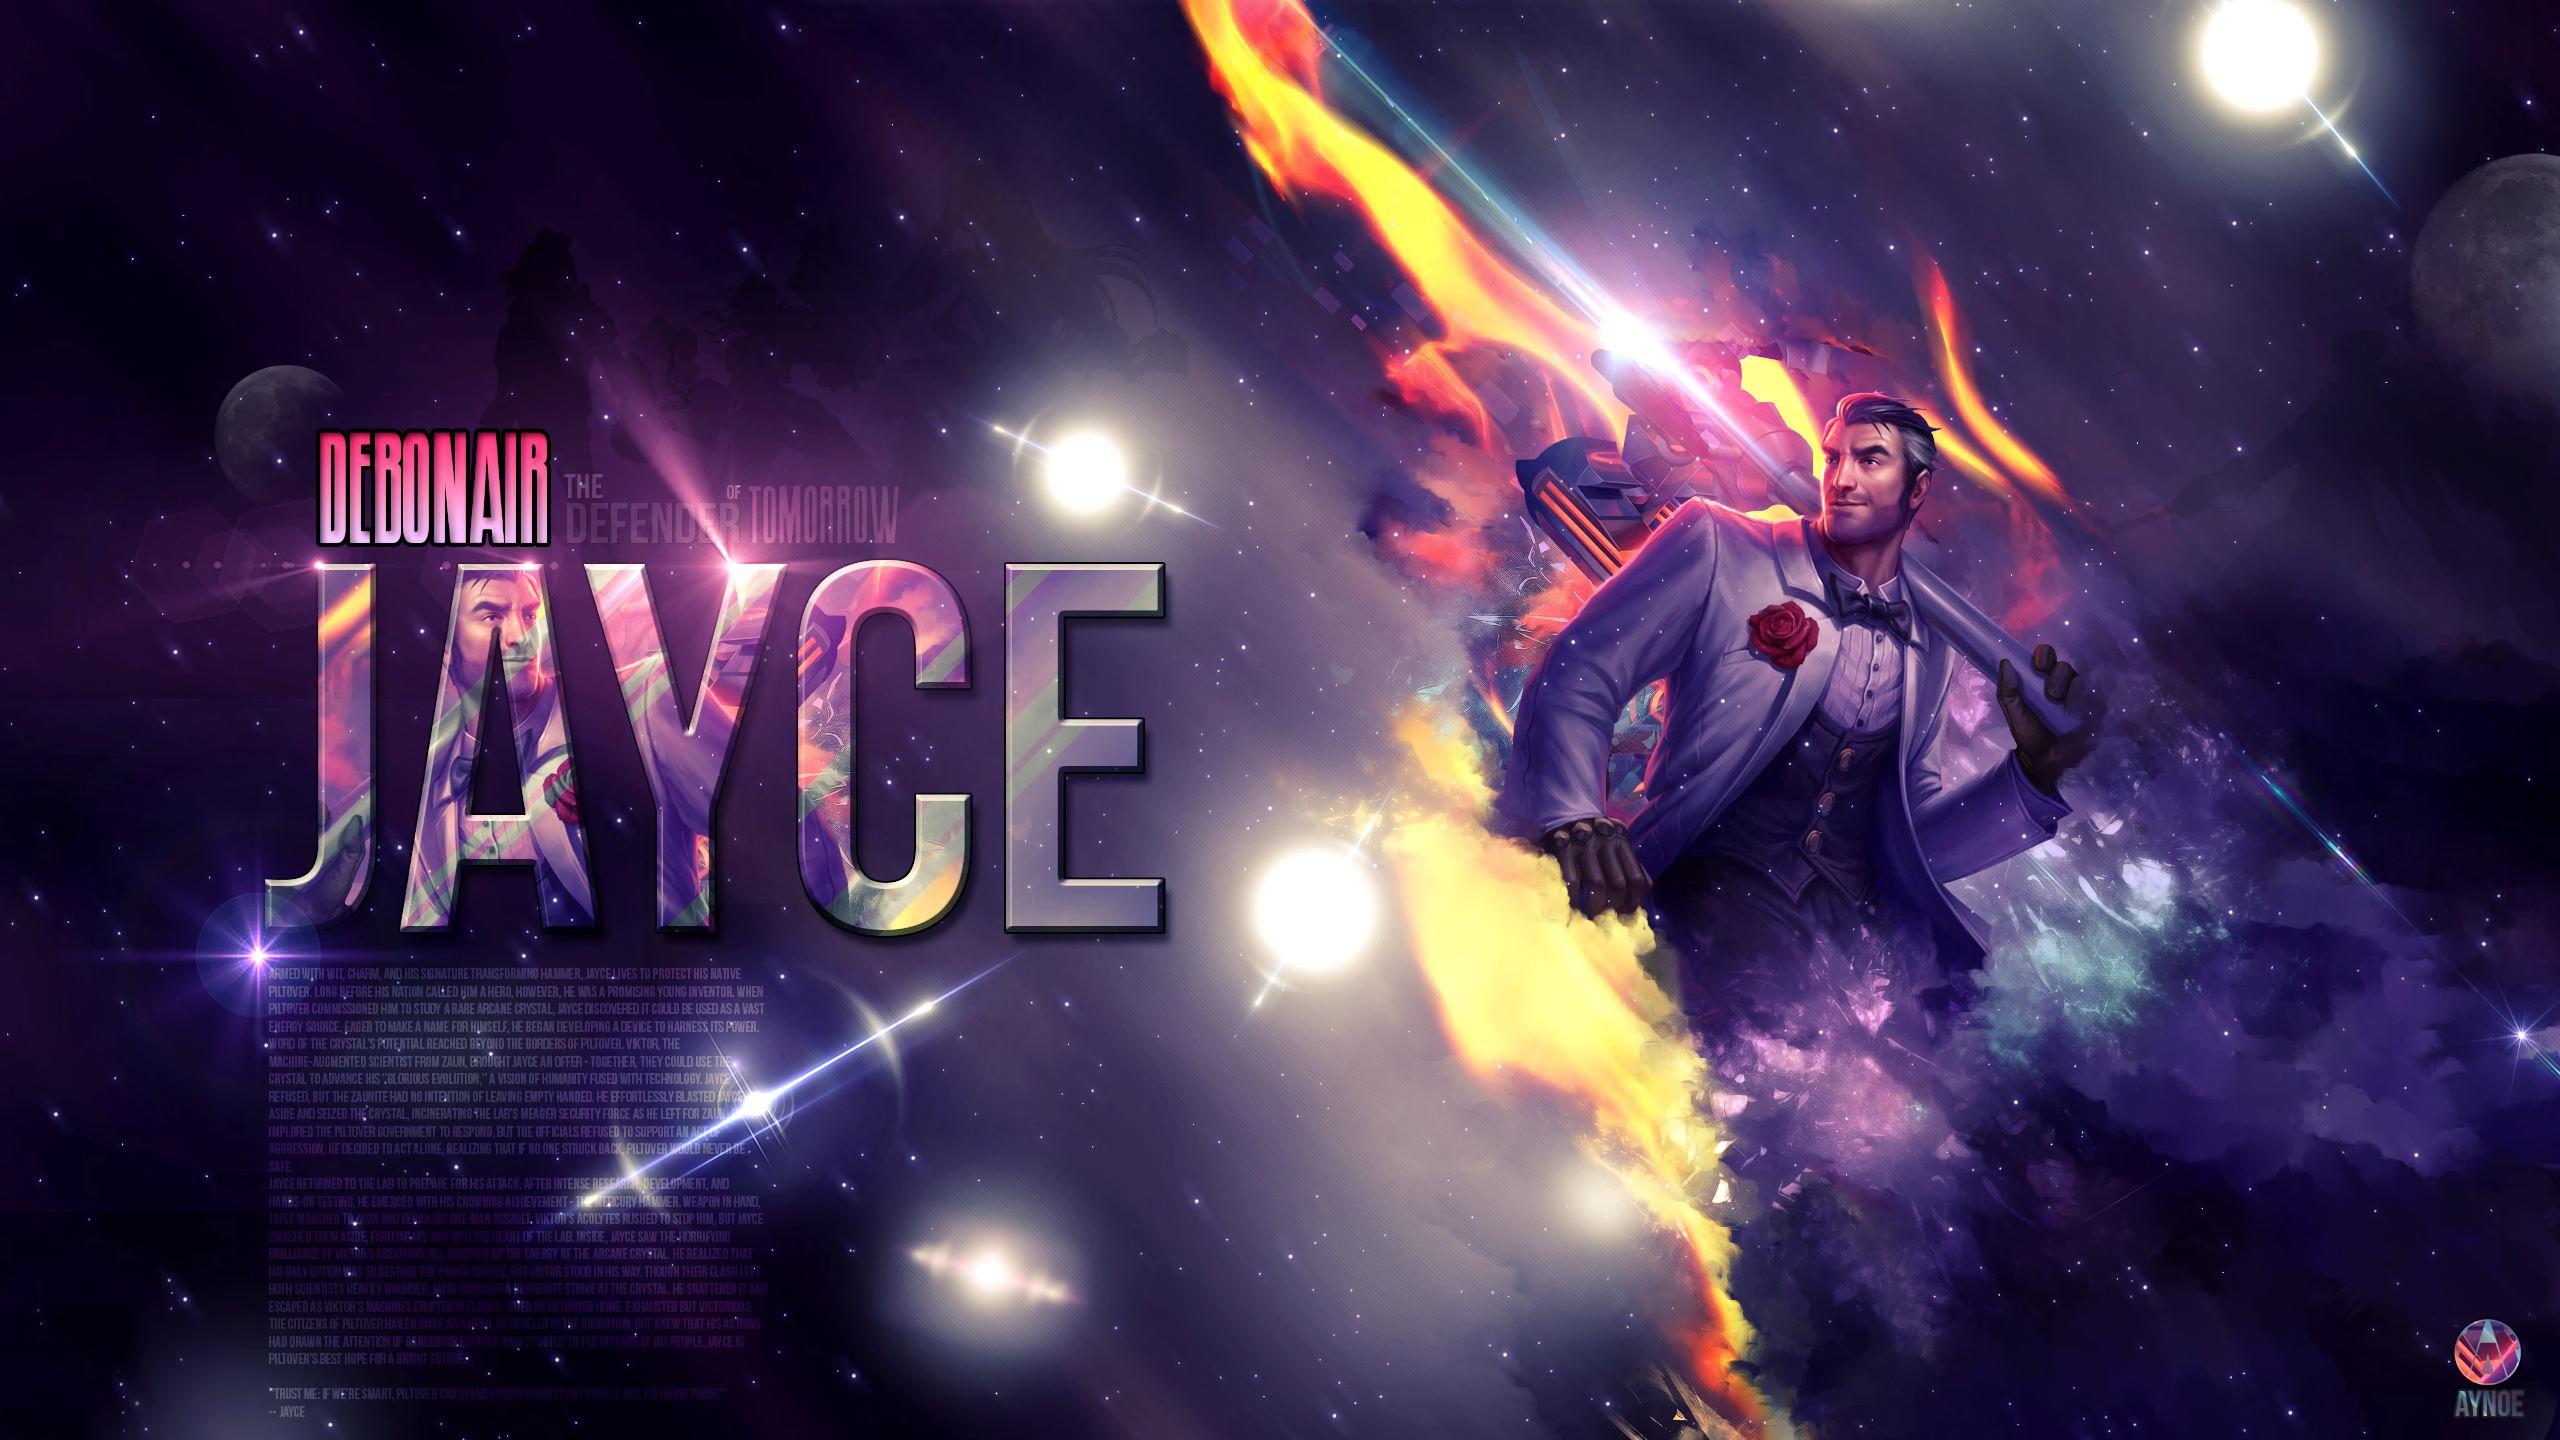 Jayce Wallpaper. HD Wallpaper & Artworks for League of Legends